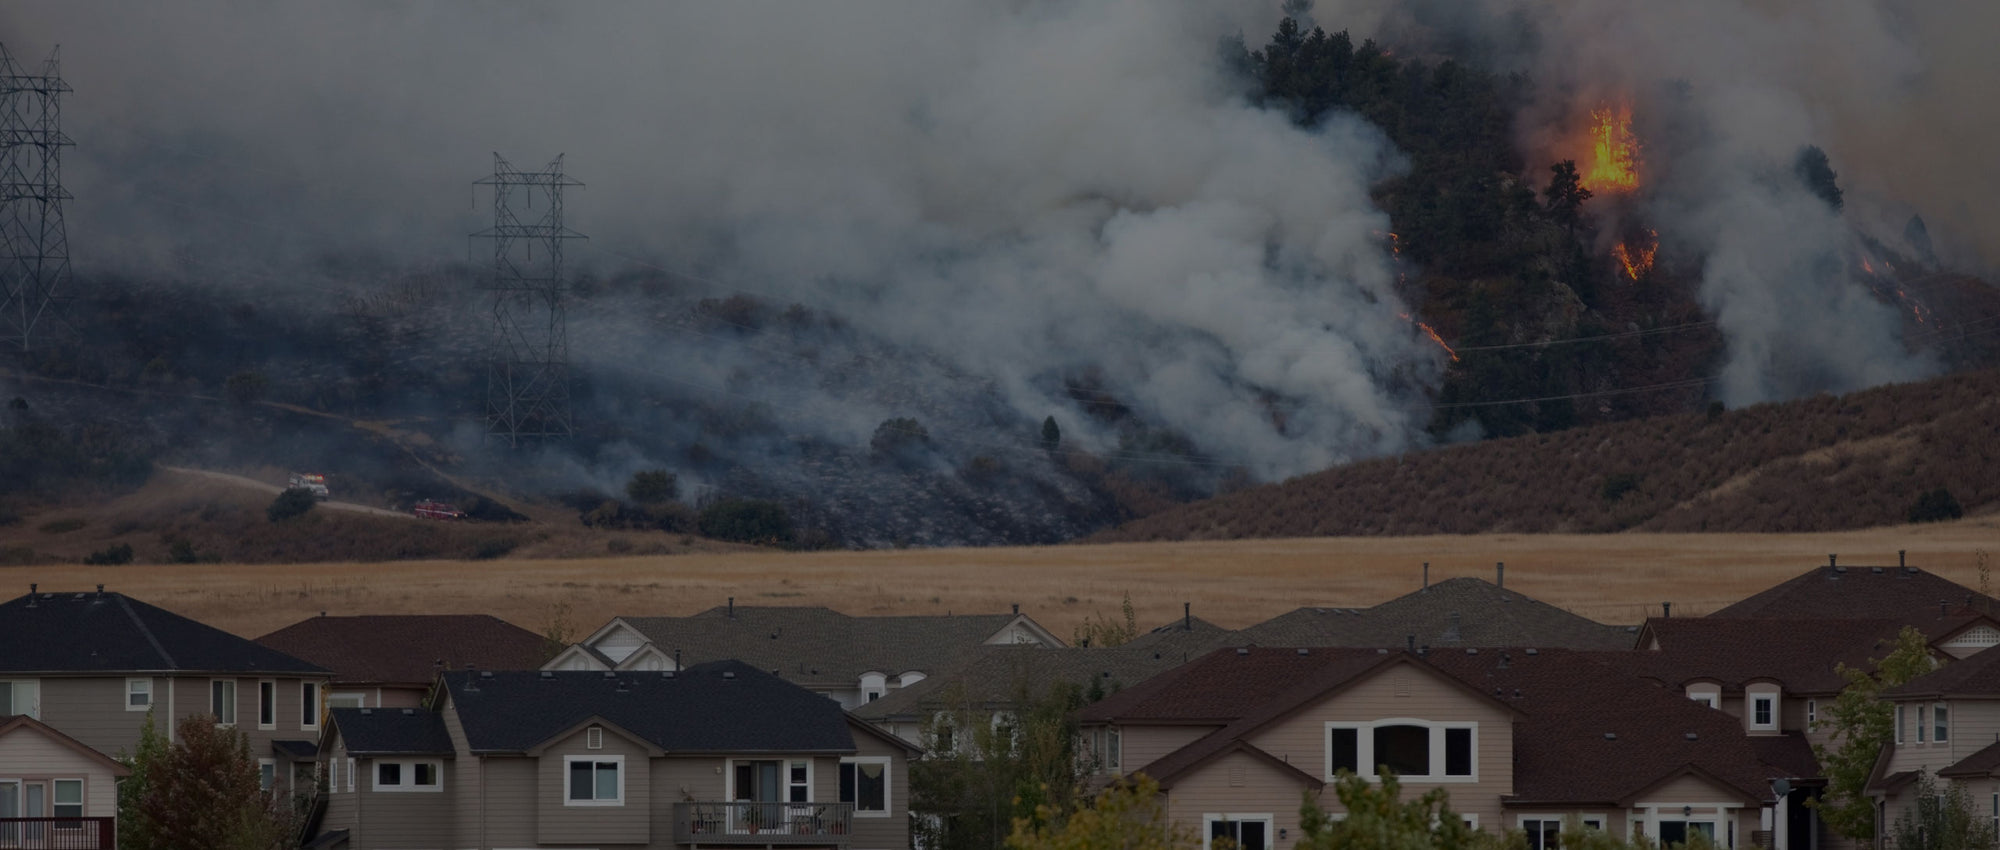 Wildfire smoke billowing near homes